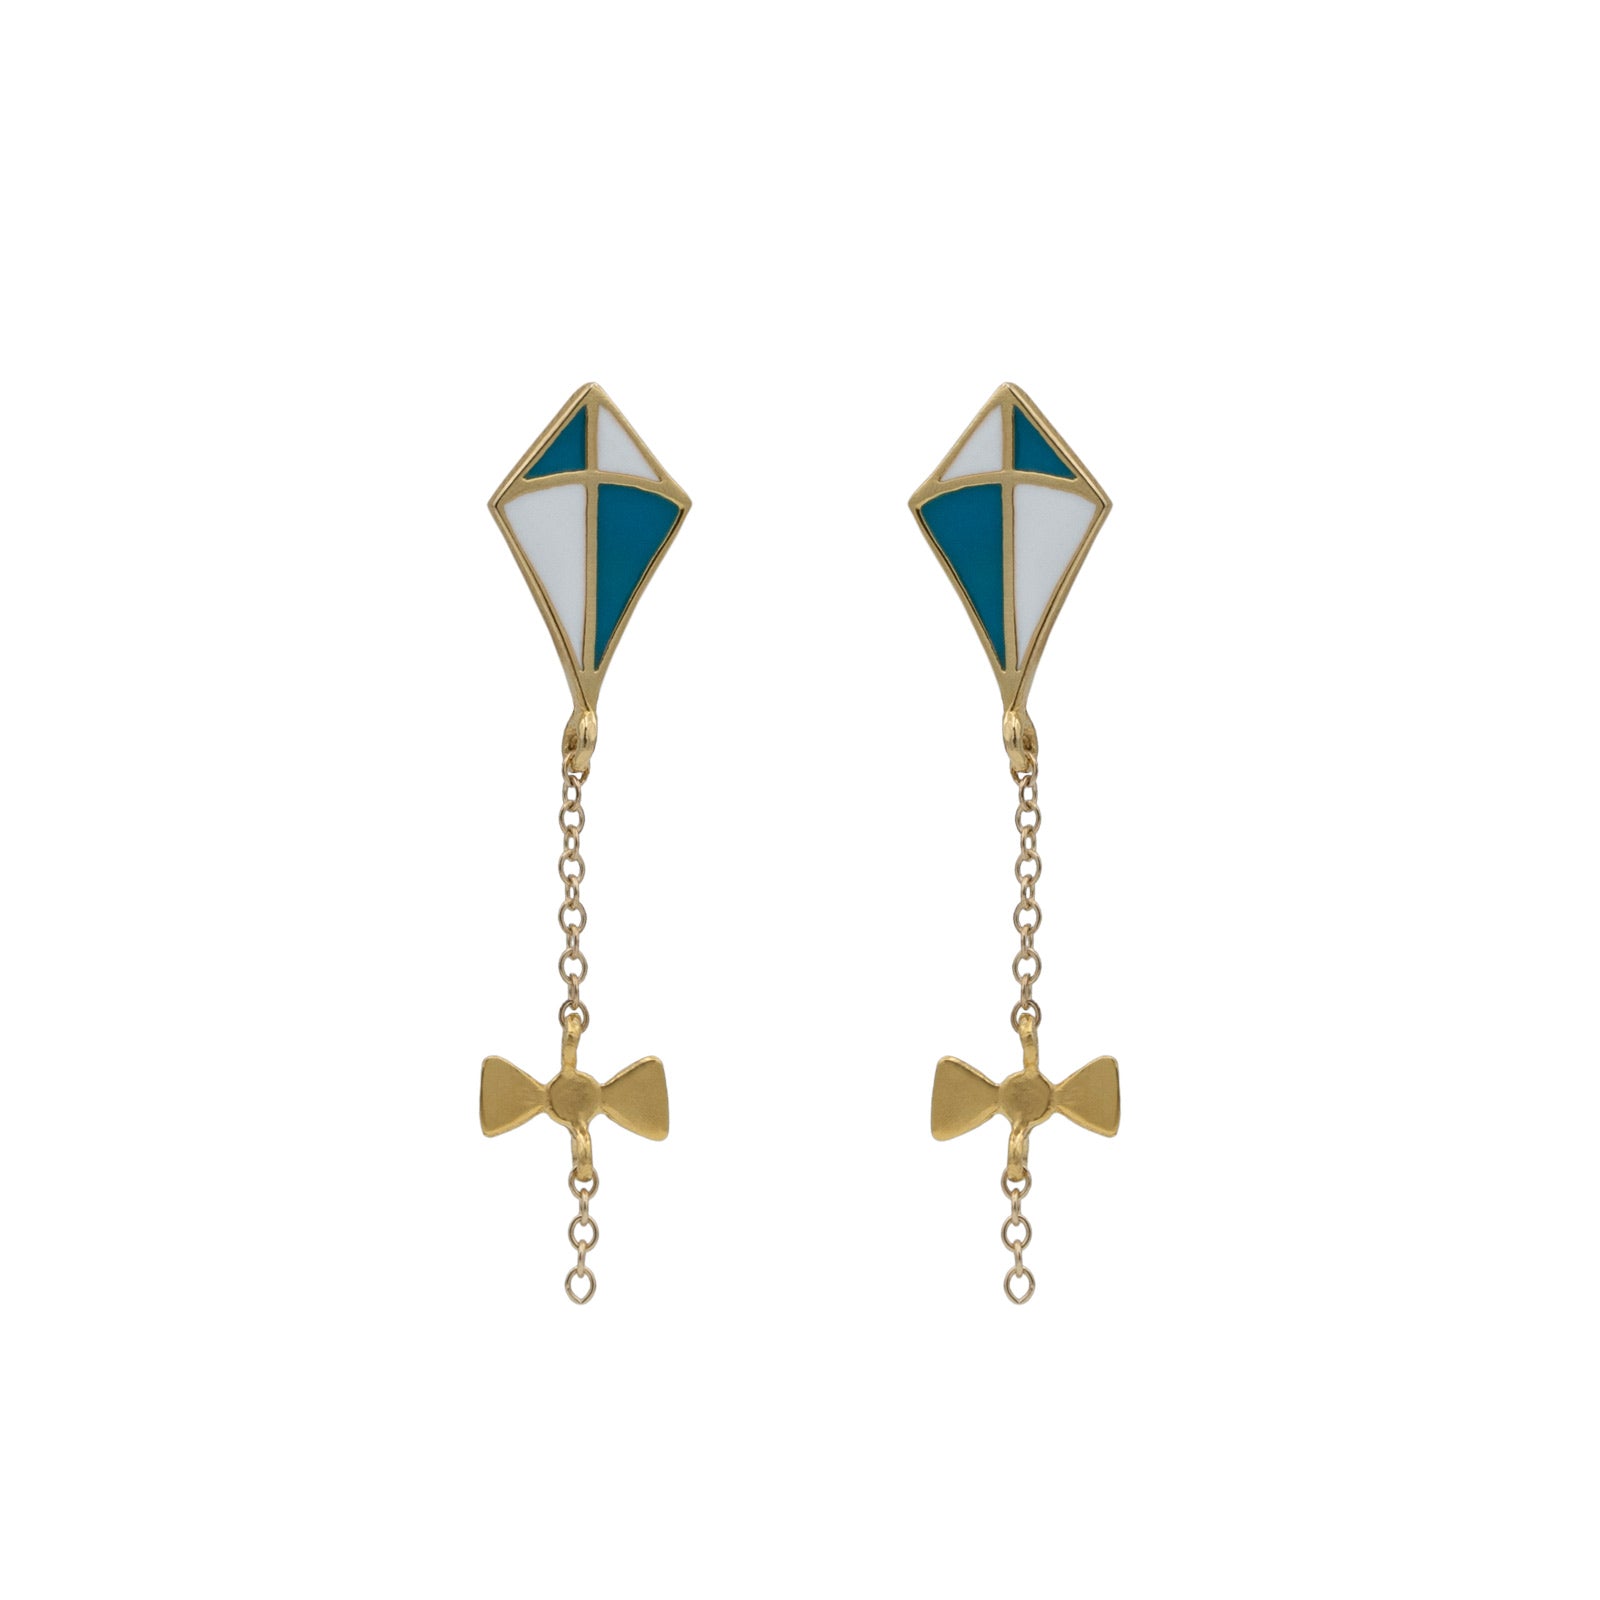 kite earrings gold in white and teal enamel